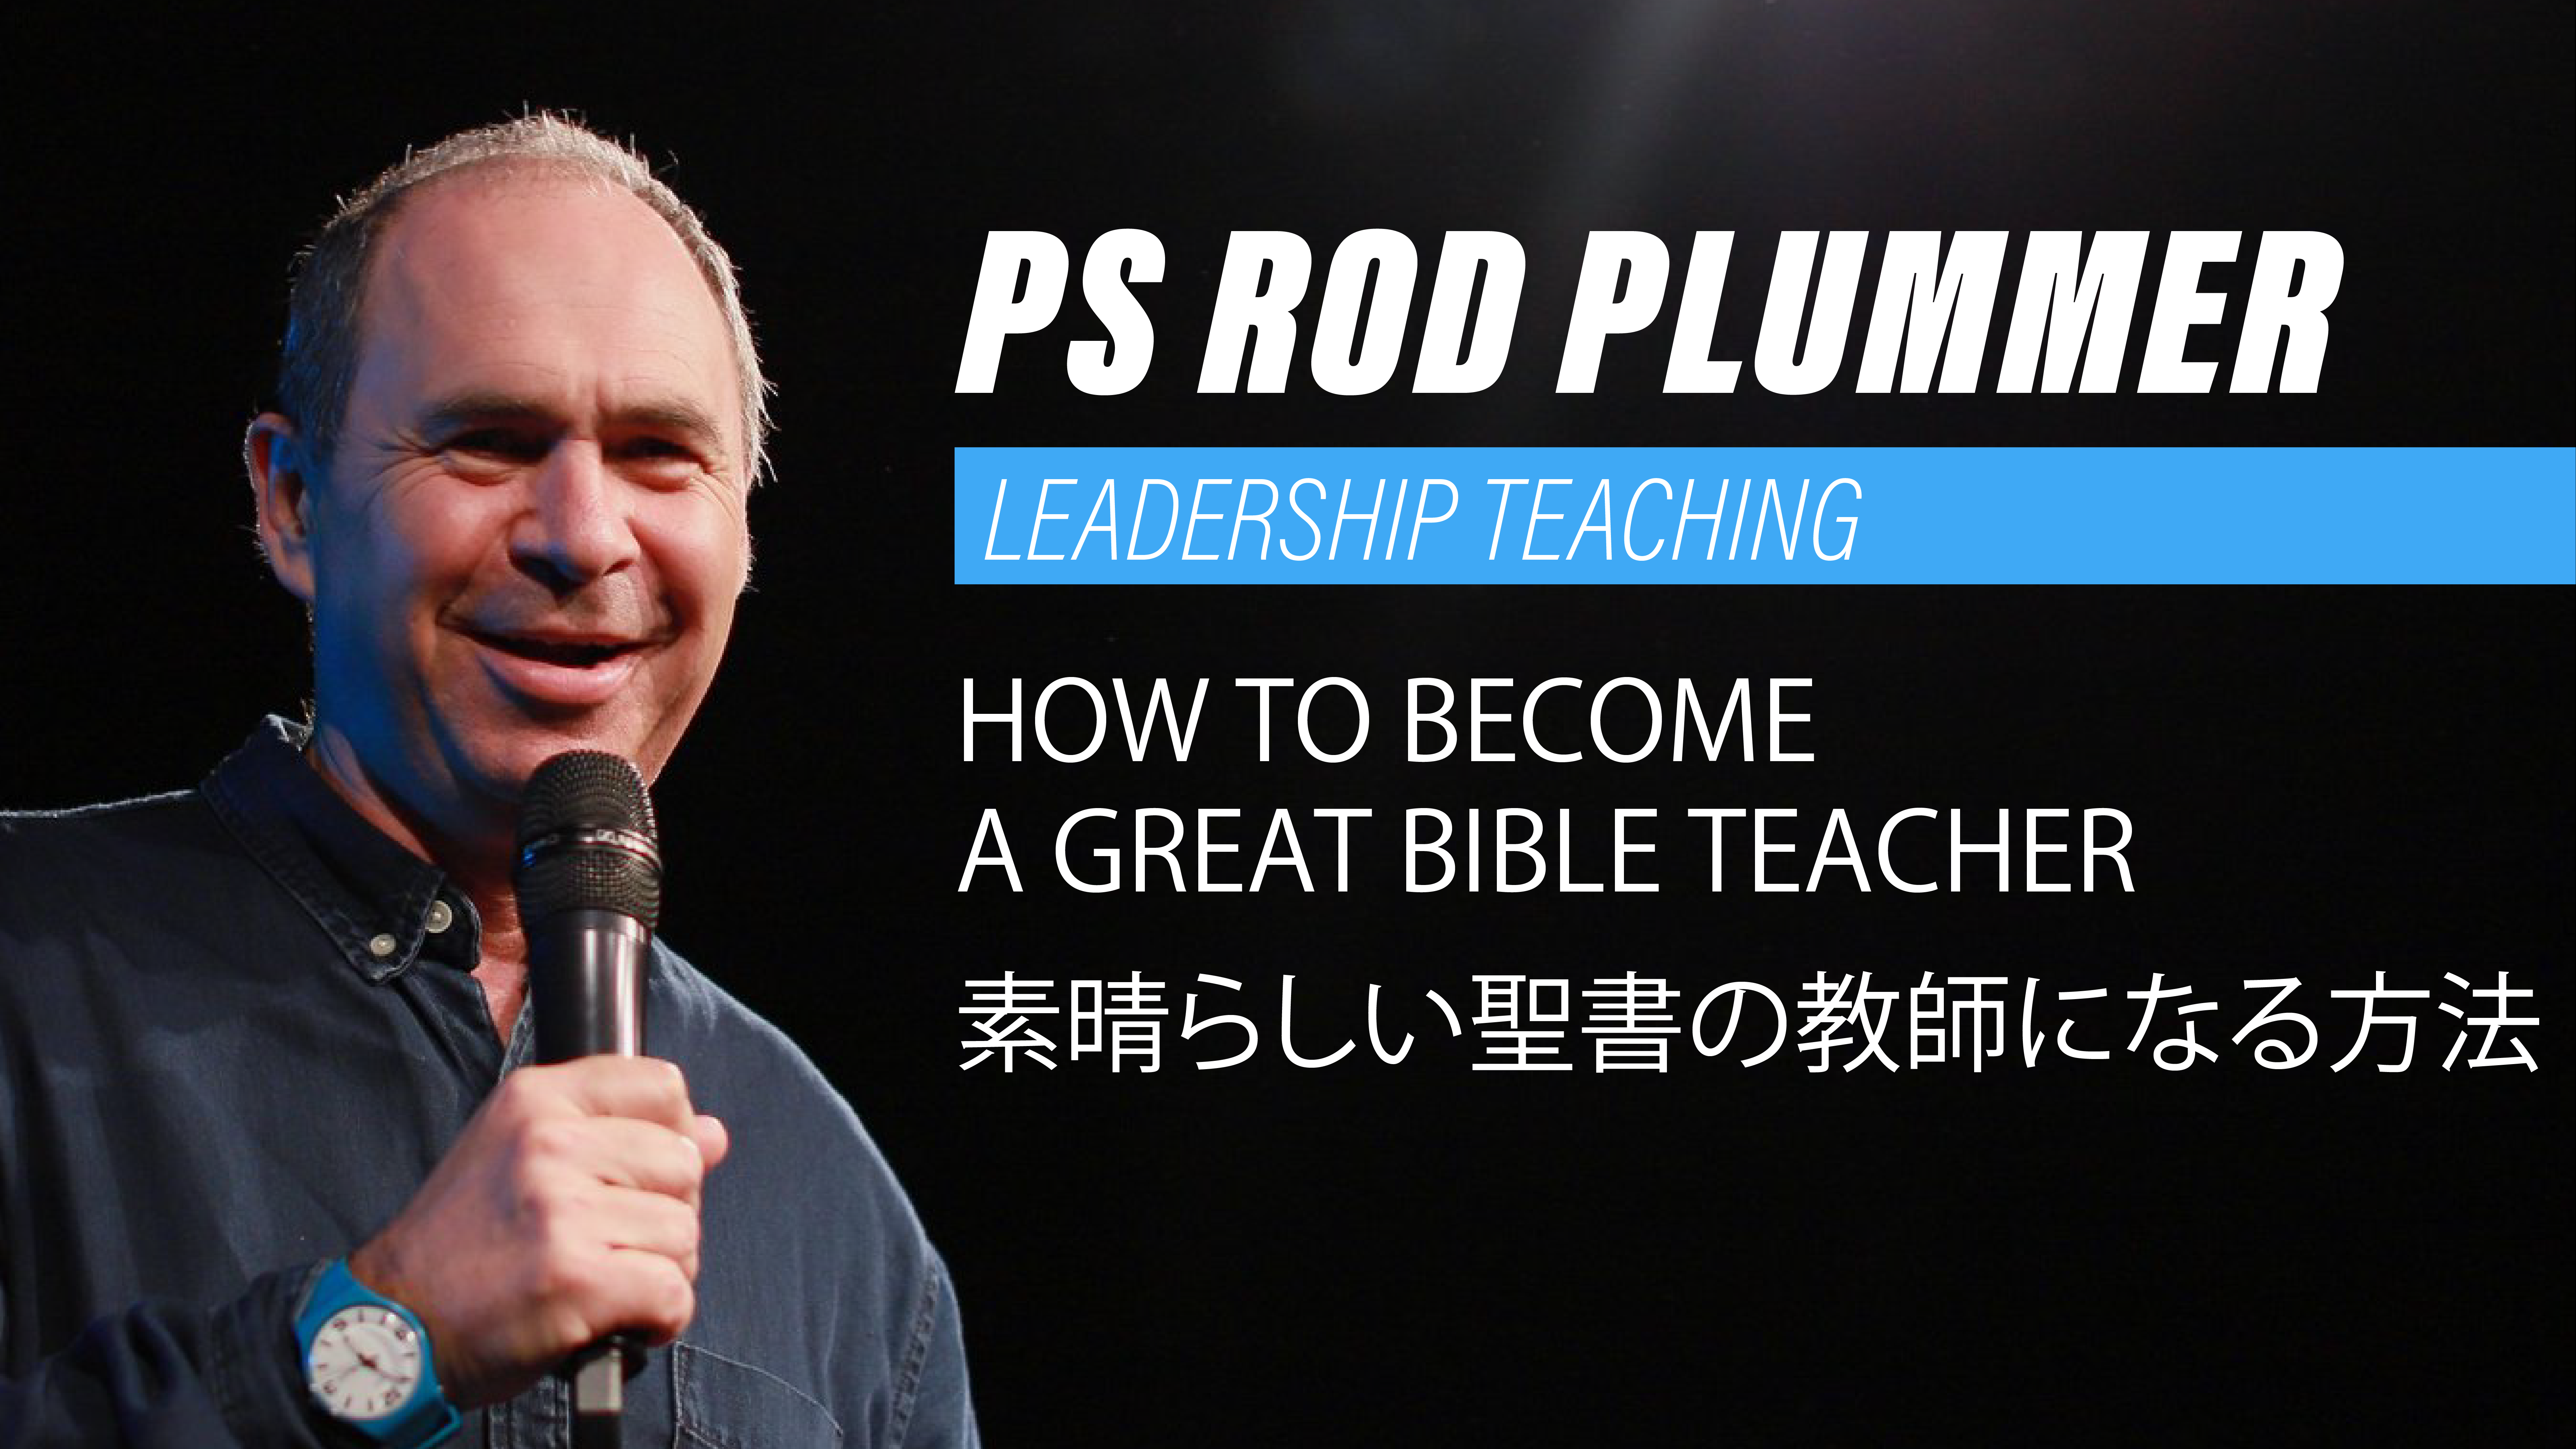 Featured image for “素晴らしい聖書の教師になる方法”